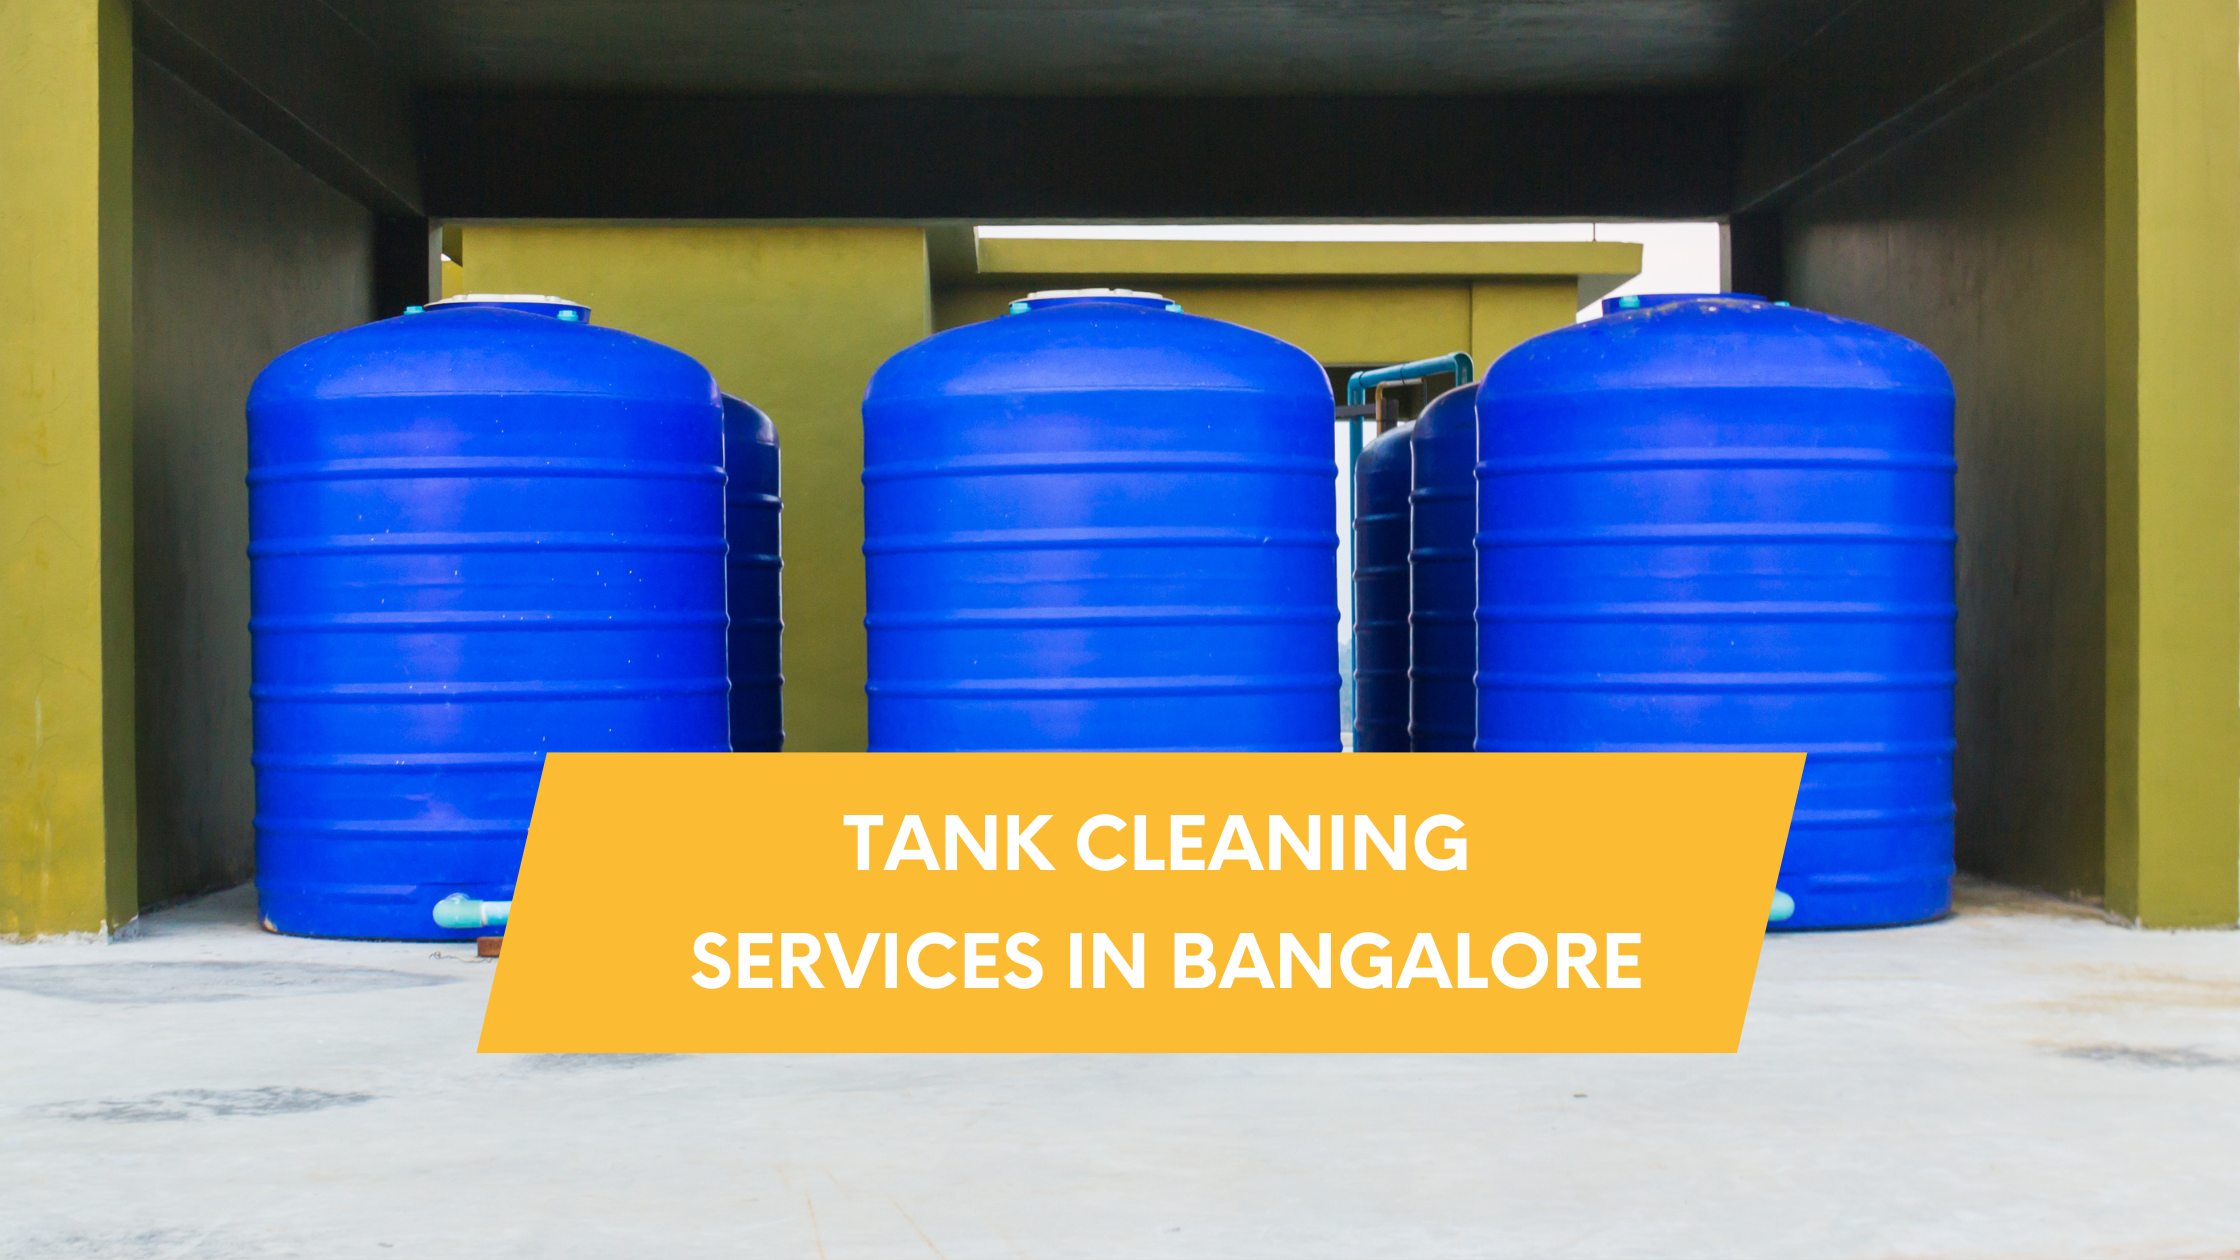 MyRaksha - Tank cleaning services in bangalore